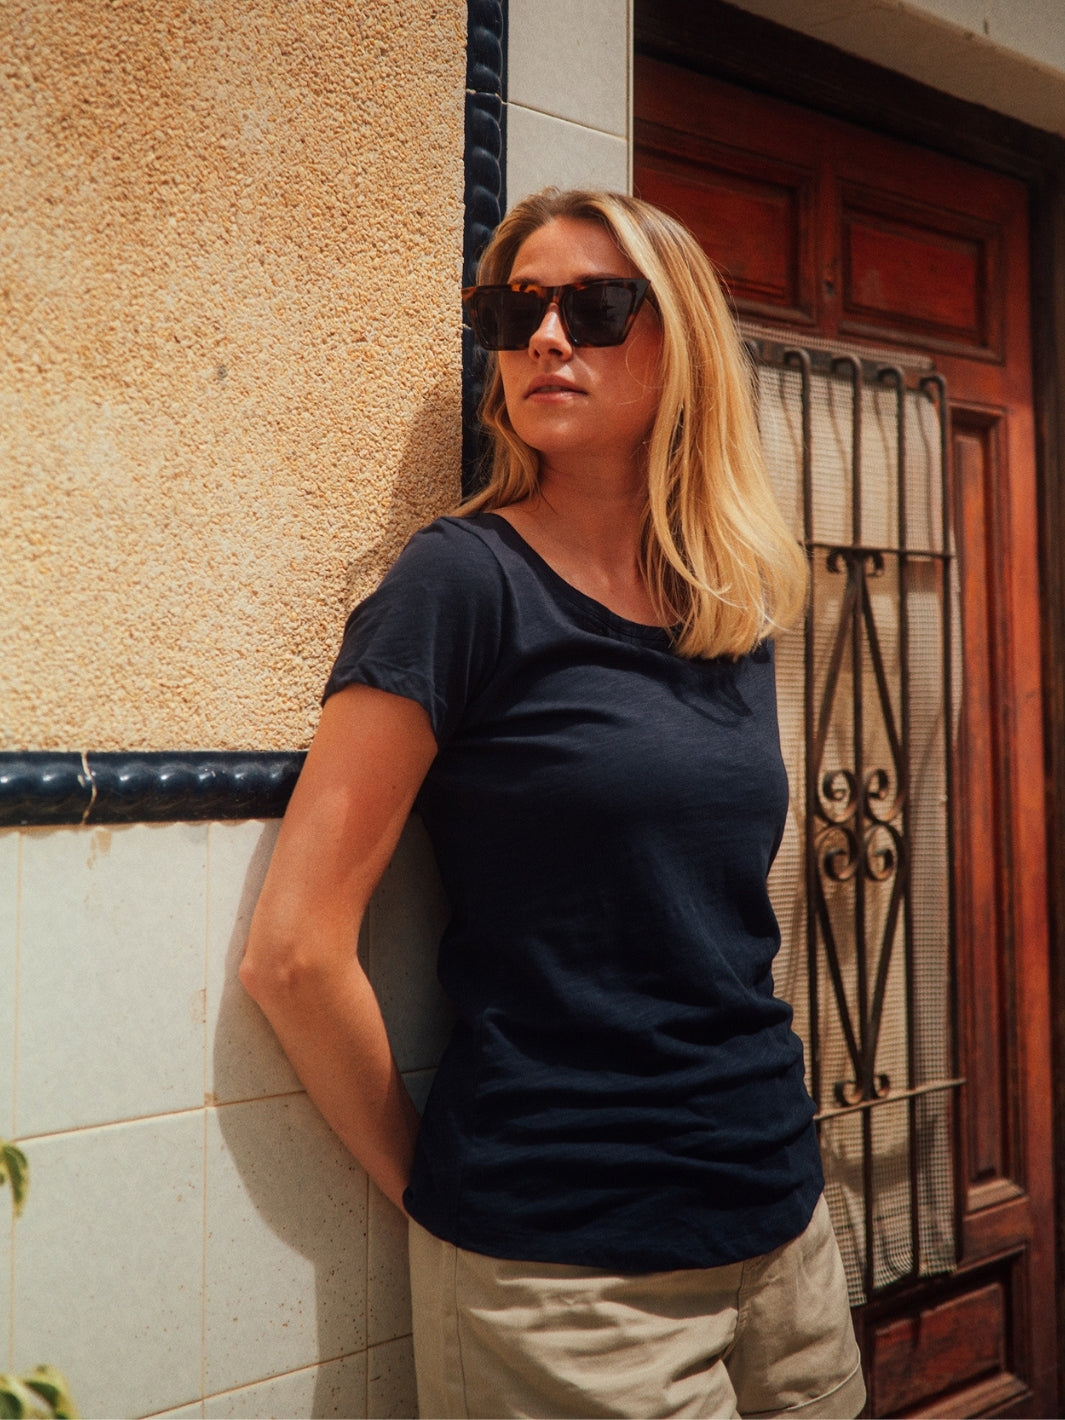 Mia dámské s-lub tričko z biobavlny s kulatým výstřihem námořní modré holka se opírá o zeď